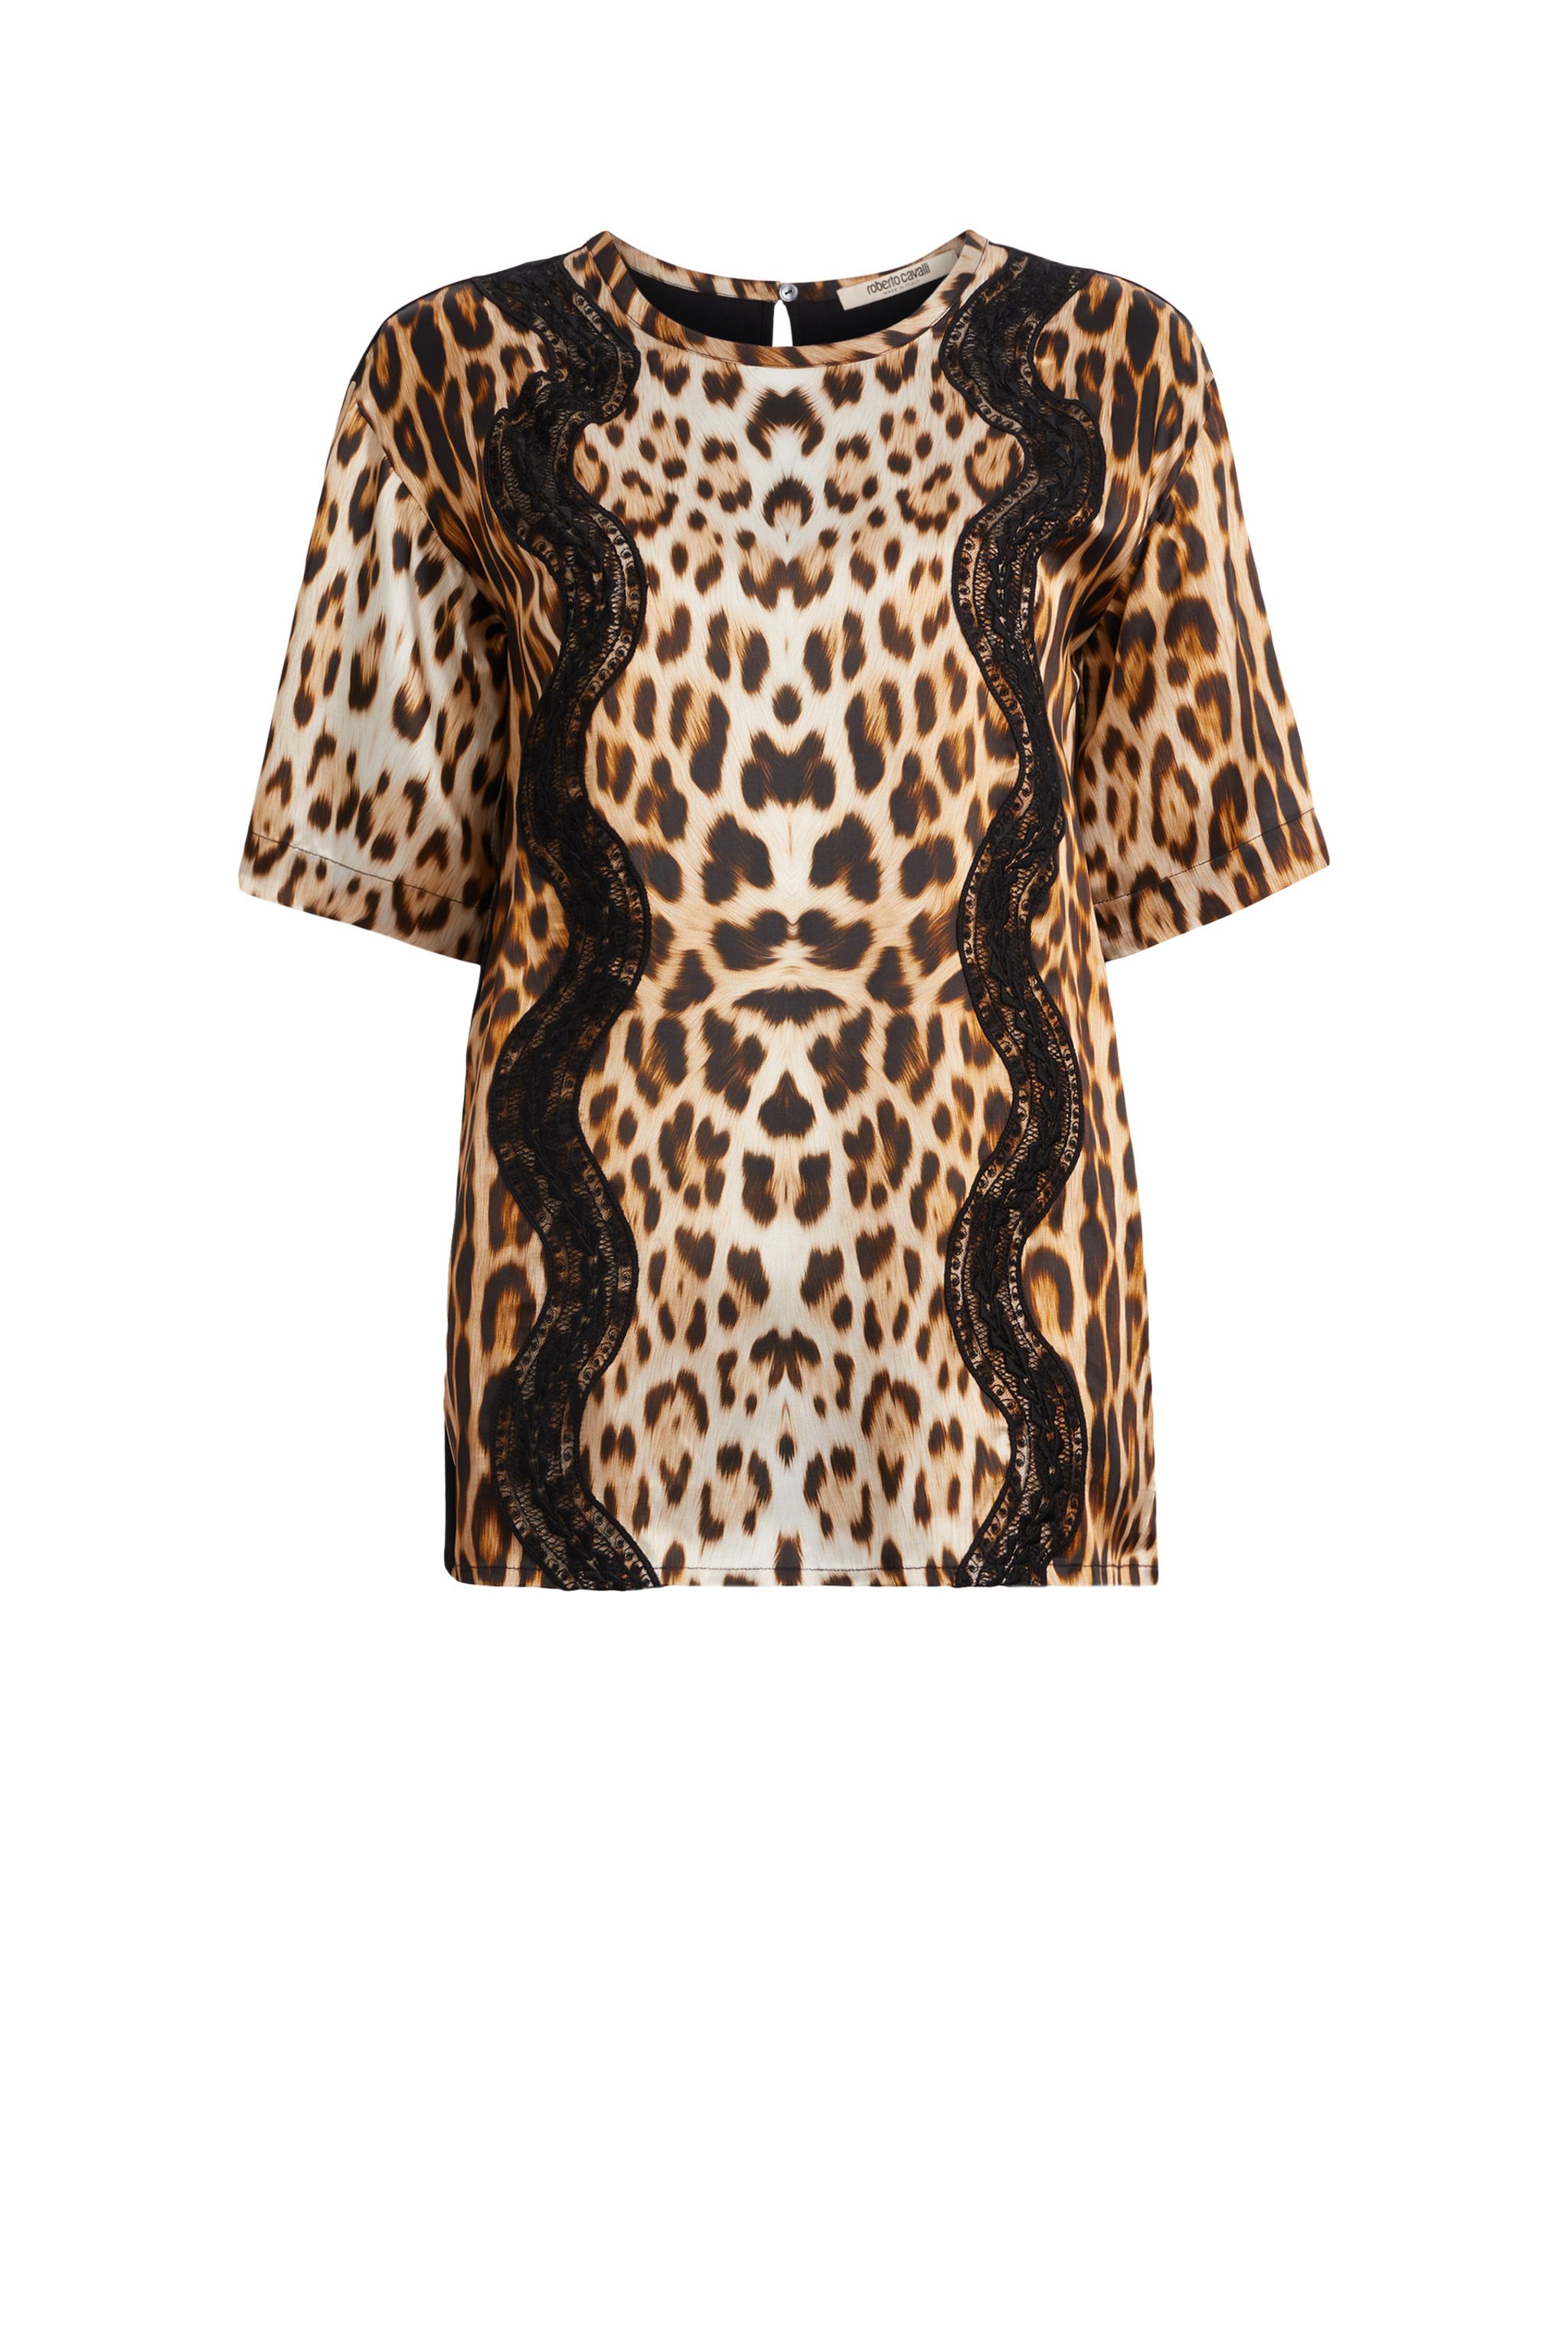 Heritage Jaguar print T-shirt with lace | Roberto Cavalli ...